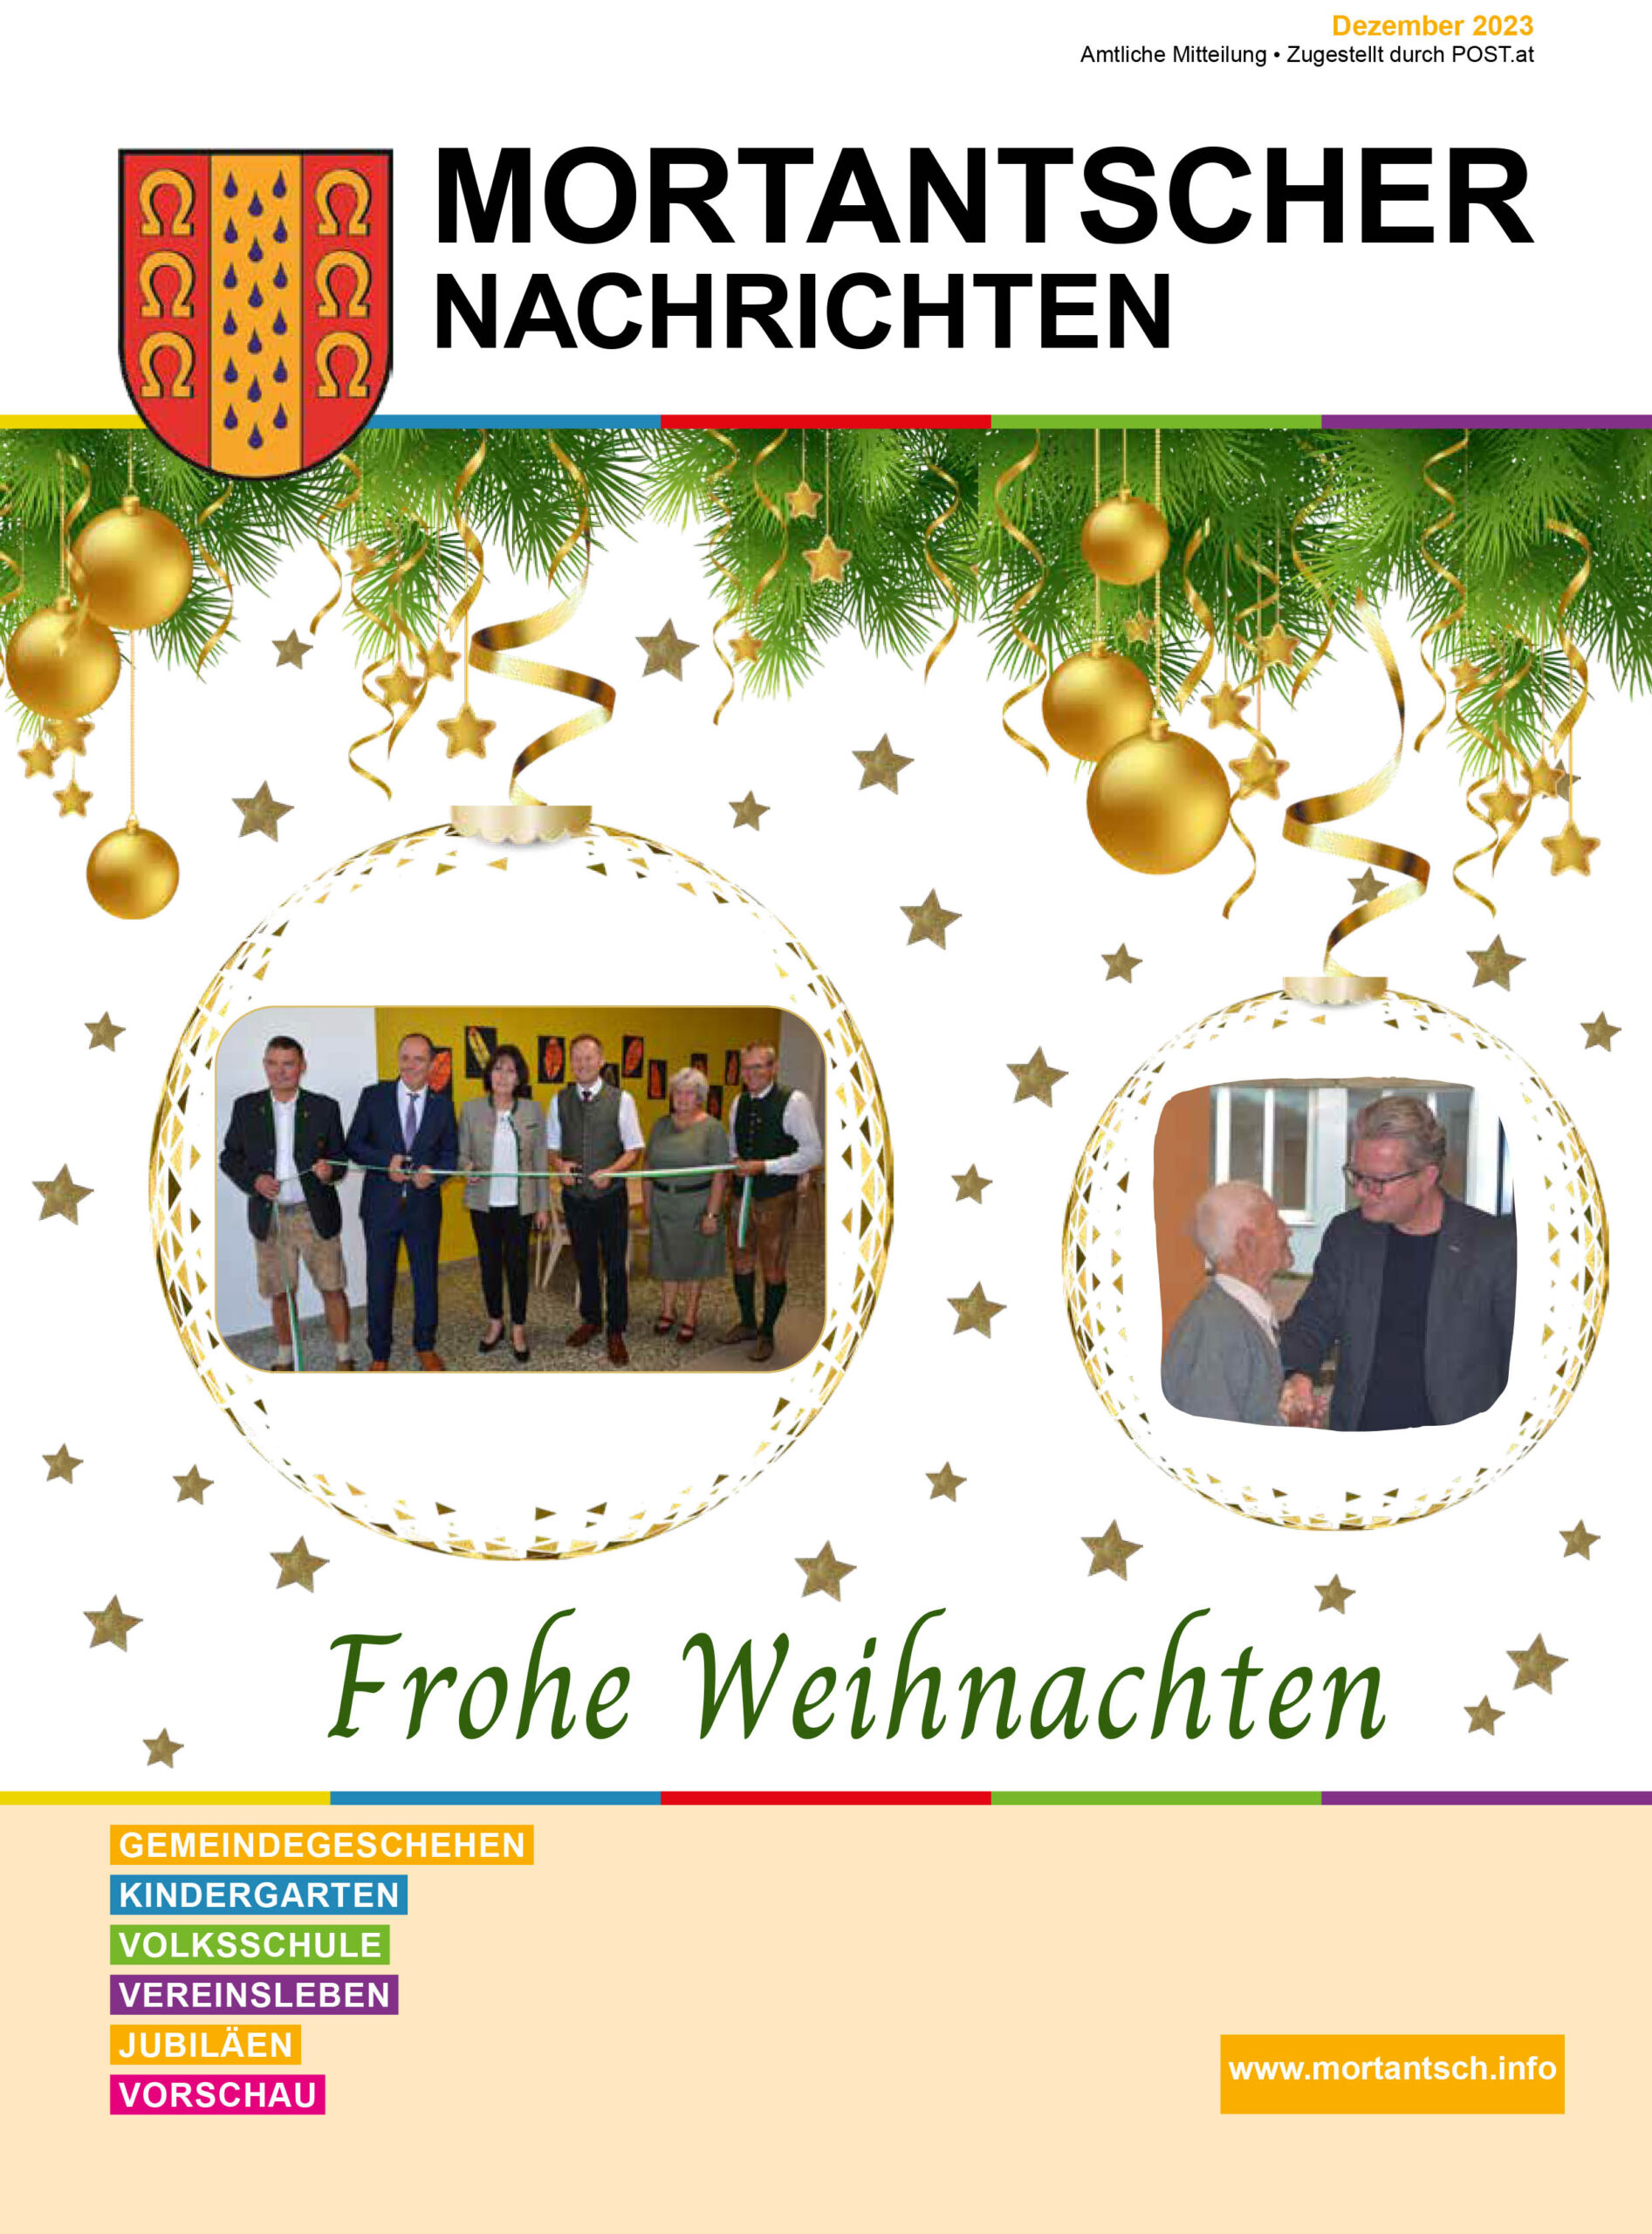 Featured image for “Mortantscher Nachrichten Dezember 2023”